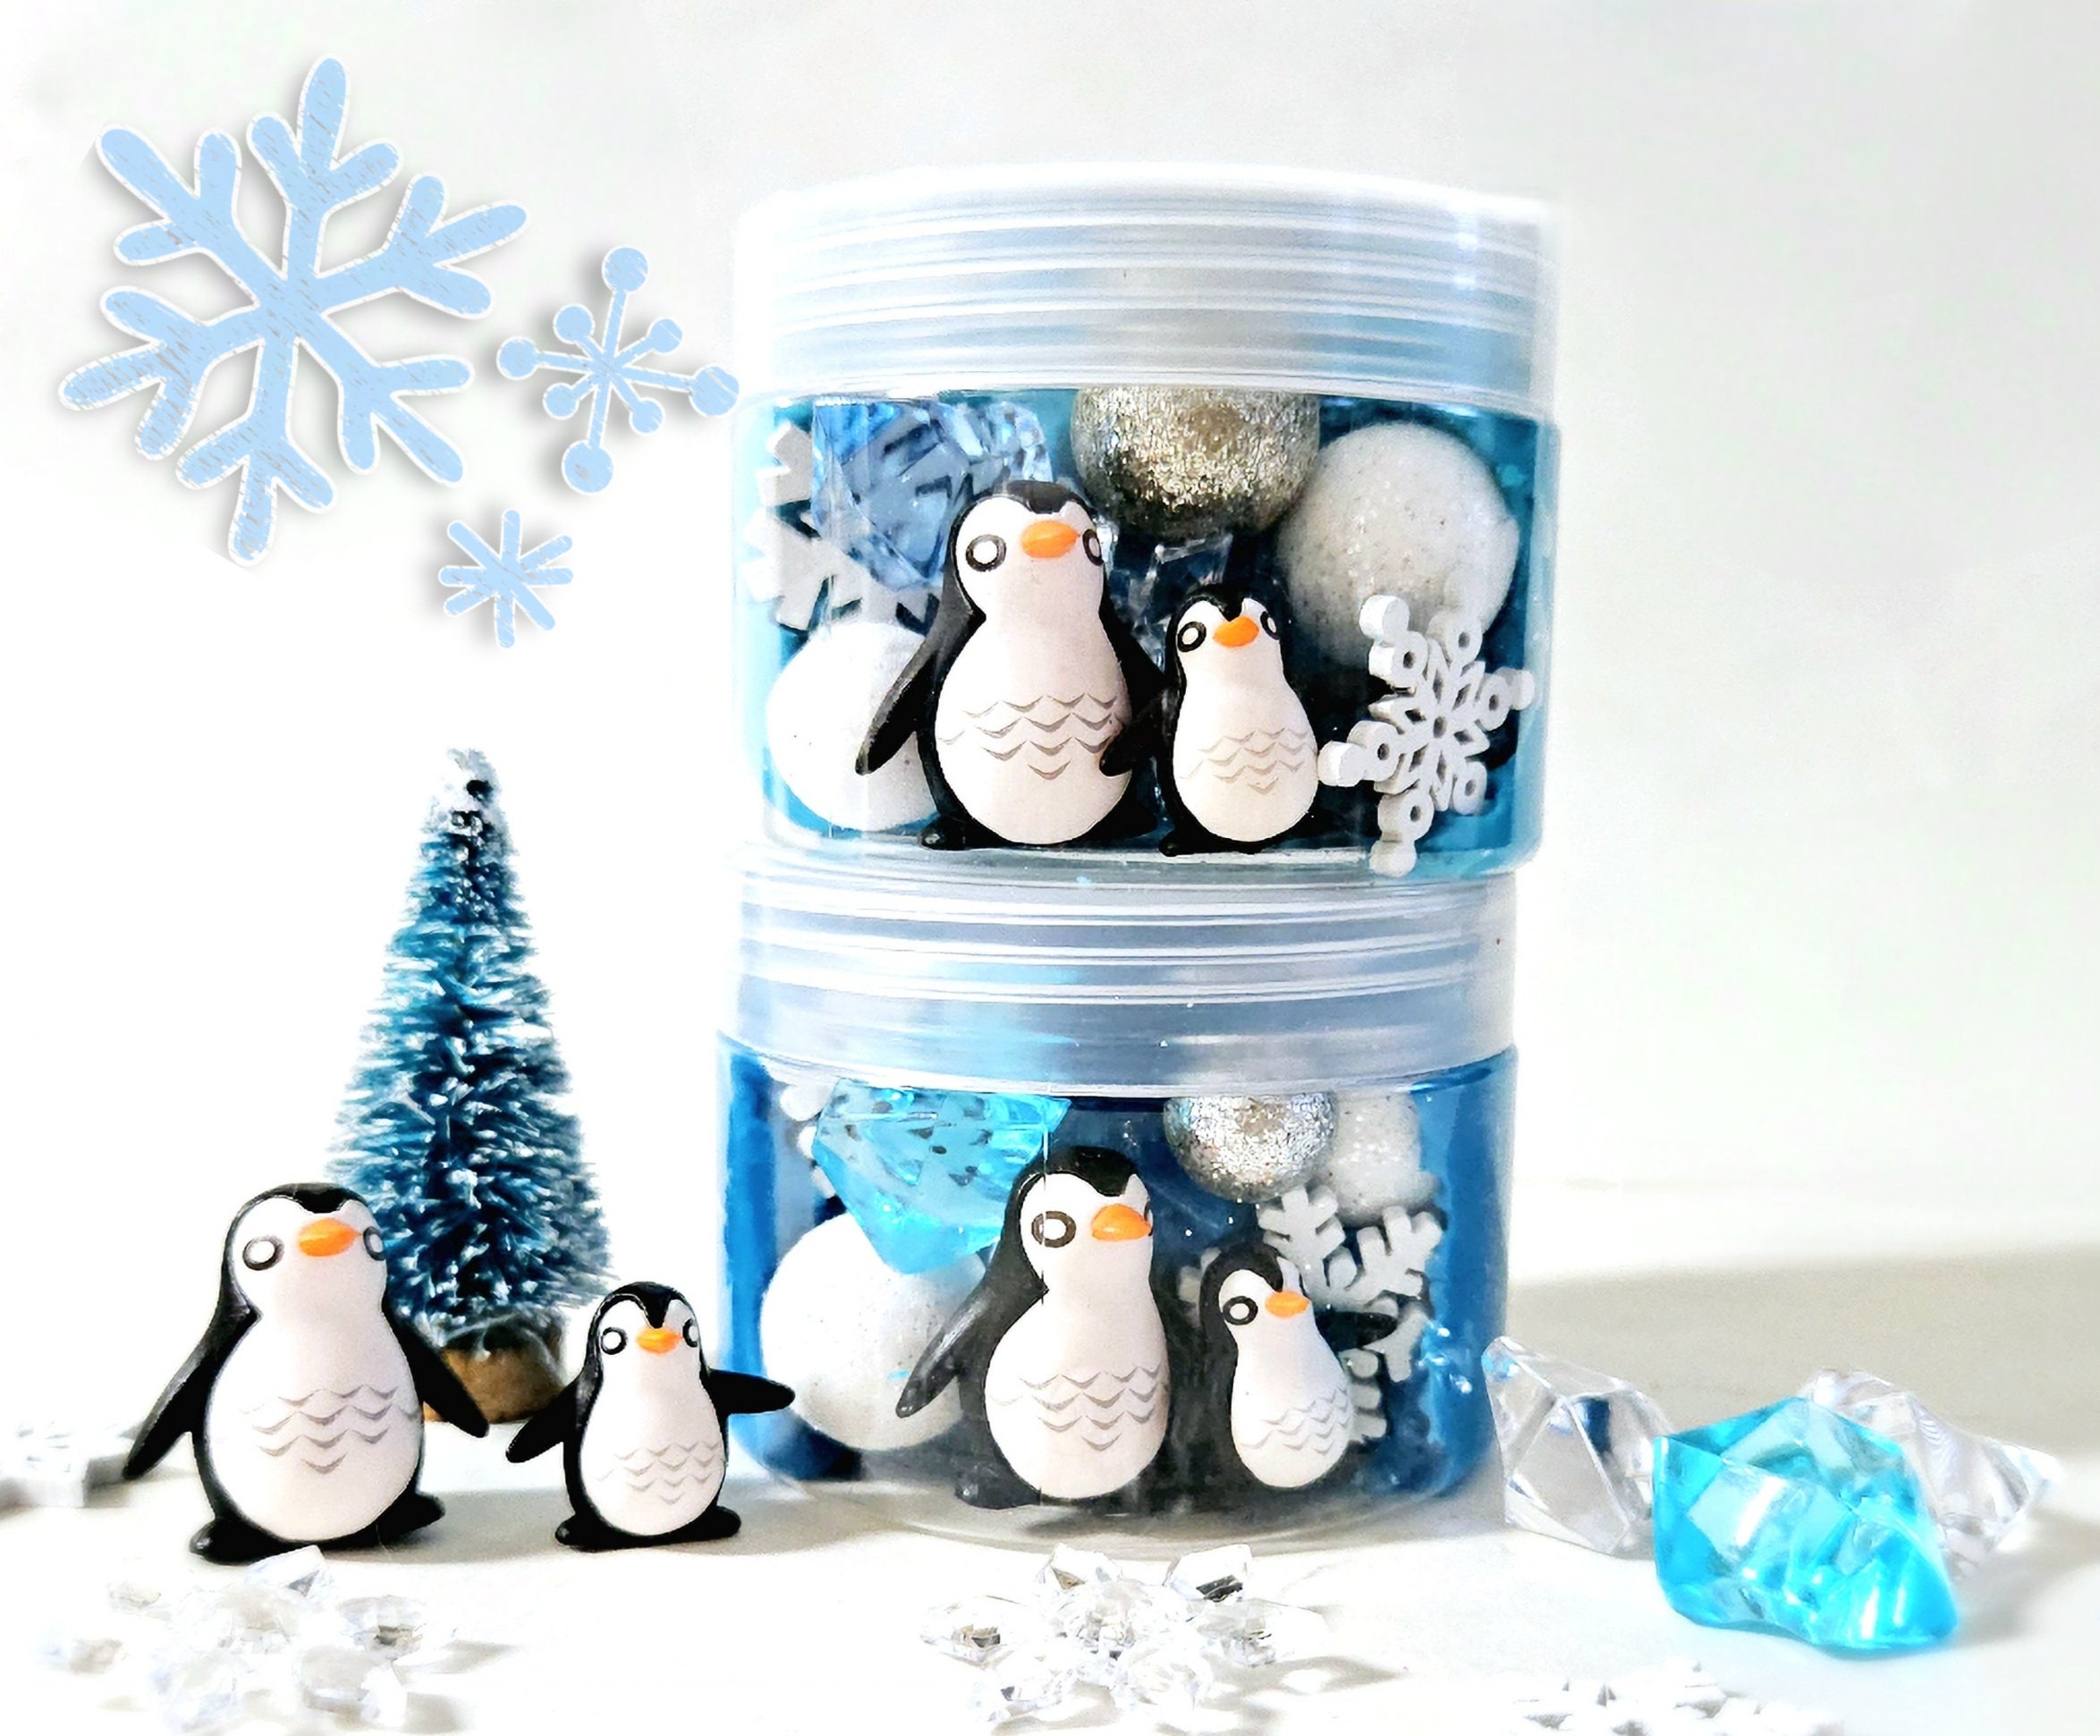 Snowman Playdough Kit, Build a Snowman Kit, Christmas Playdough Jars,  Christmas Sensory Kit, Christmas Sensory Bin, Kids Stocking Stuffers 